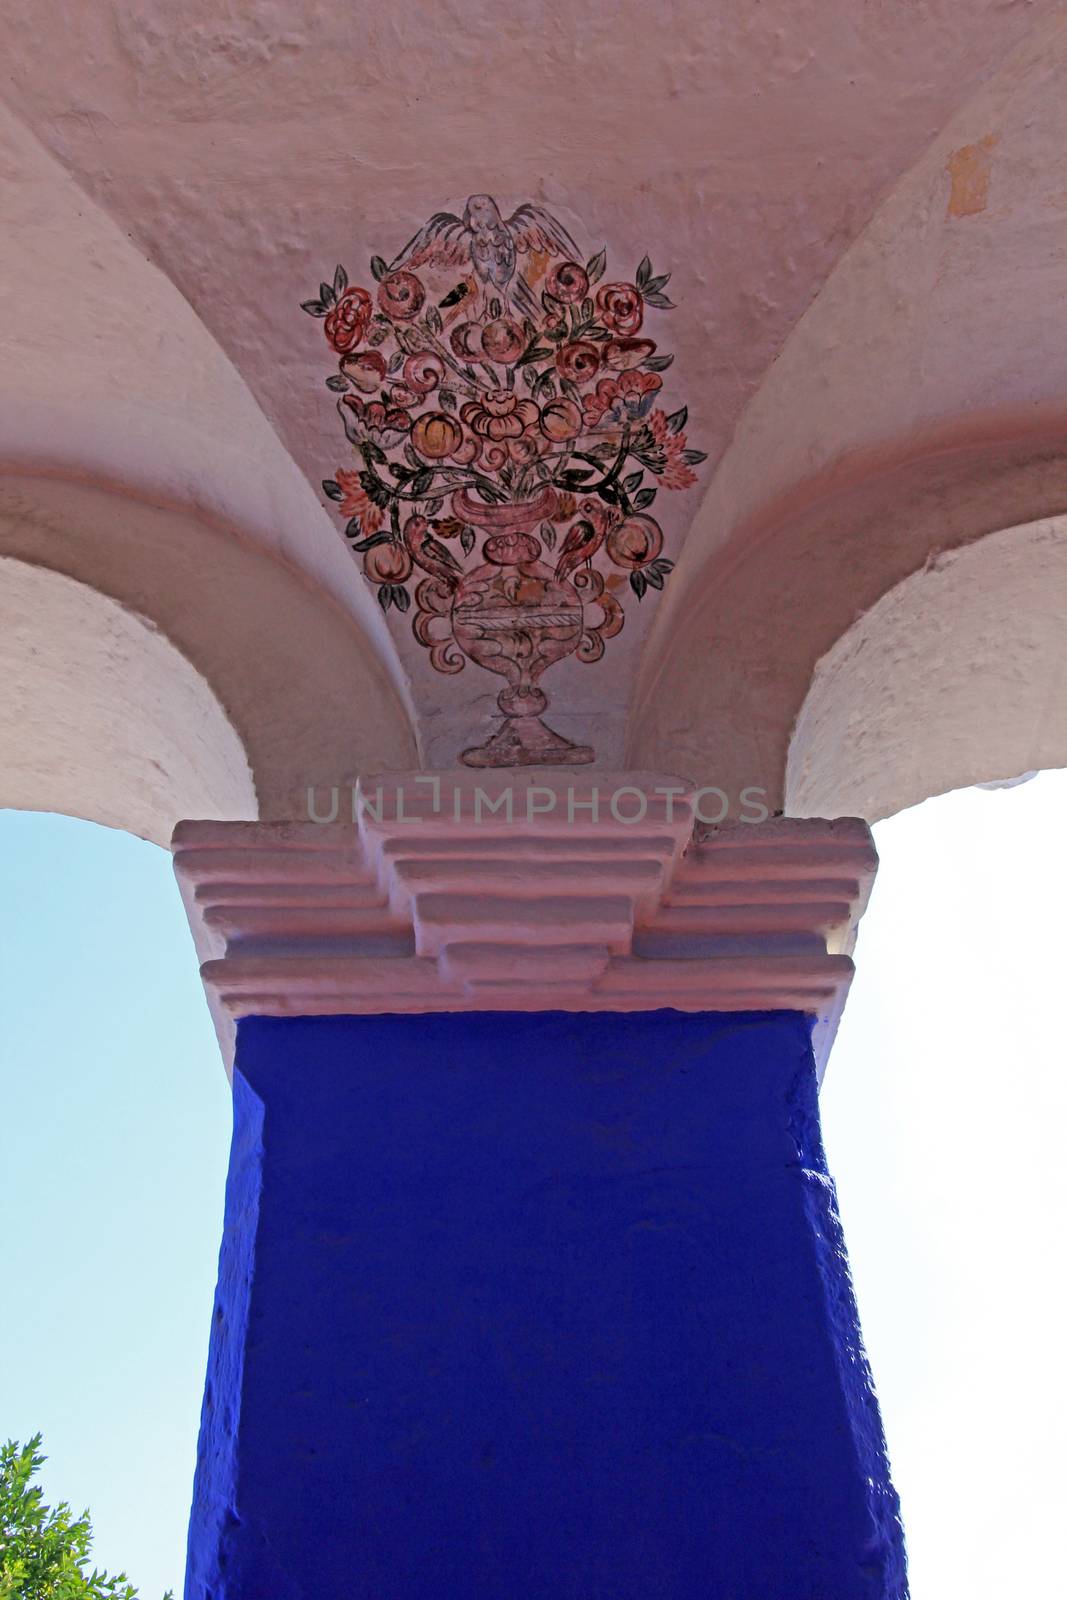 Pillar of the monastery Saint Catherine, Santa Catalina, Arequipa, Peru. by cicloco